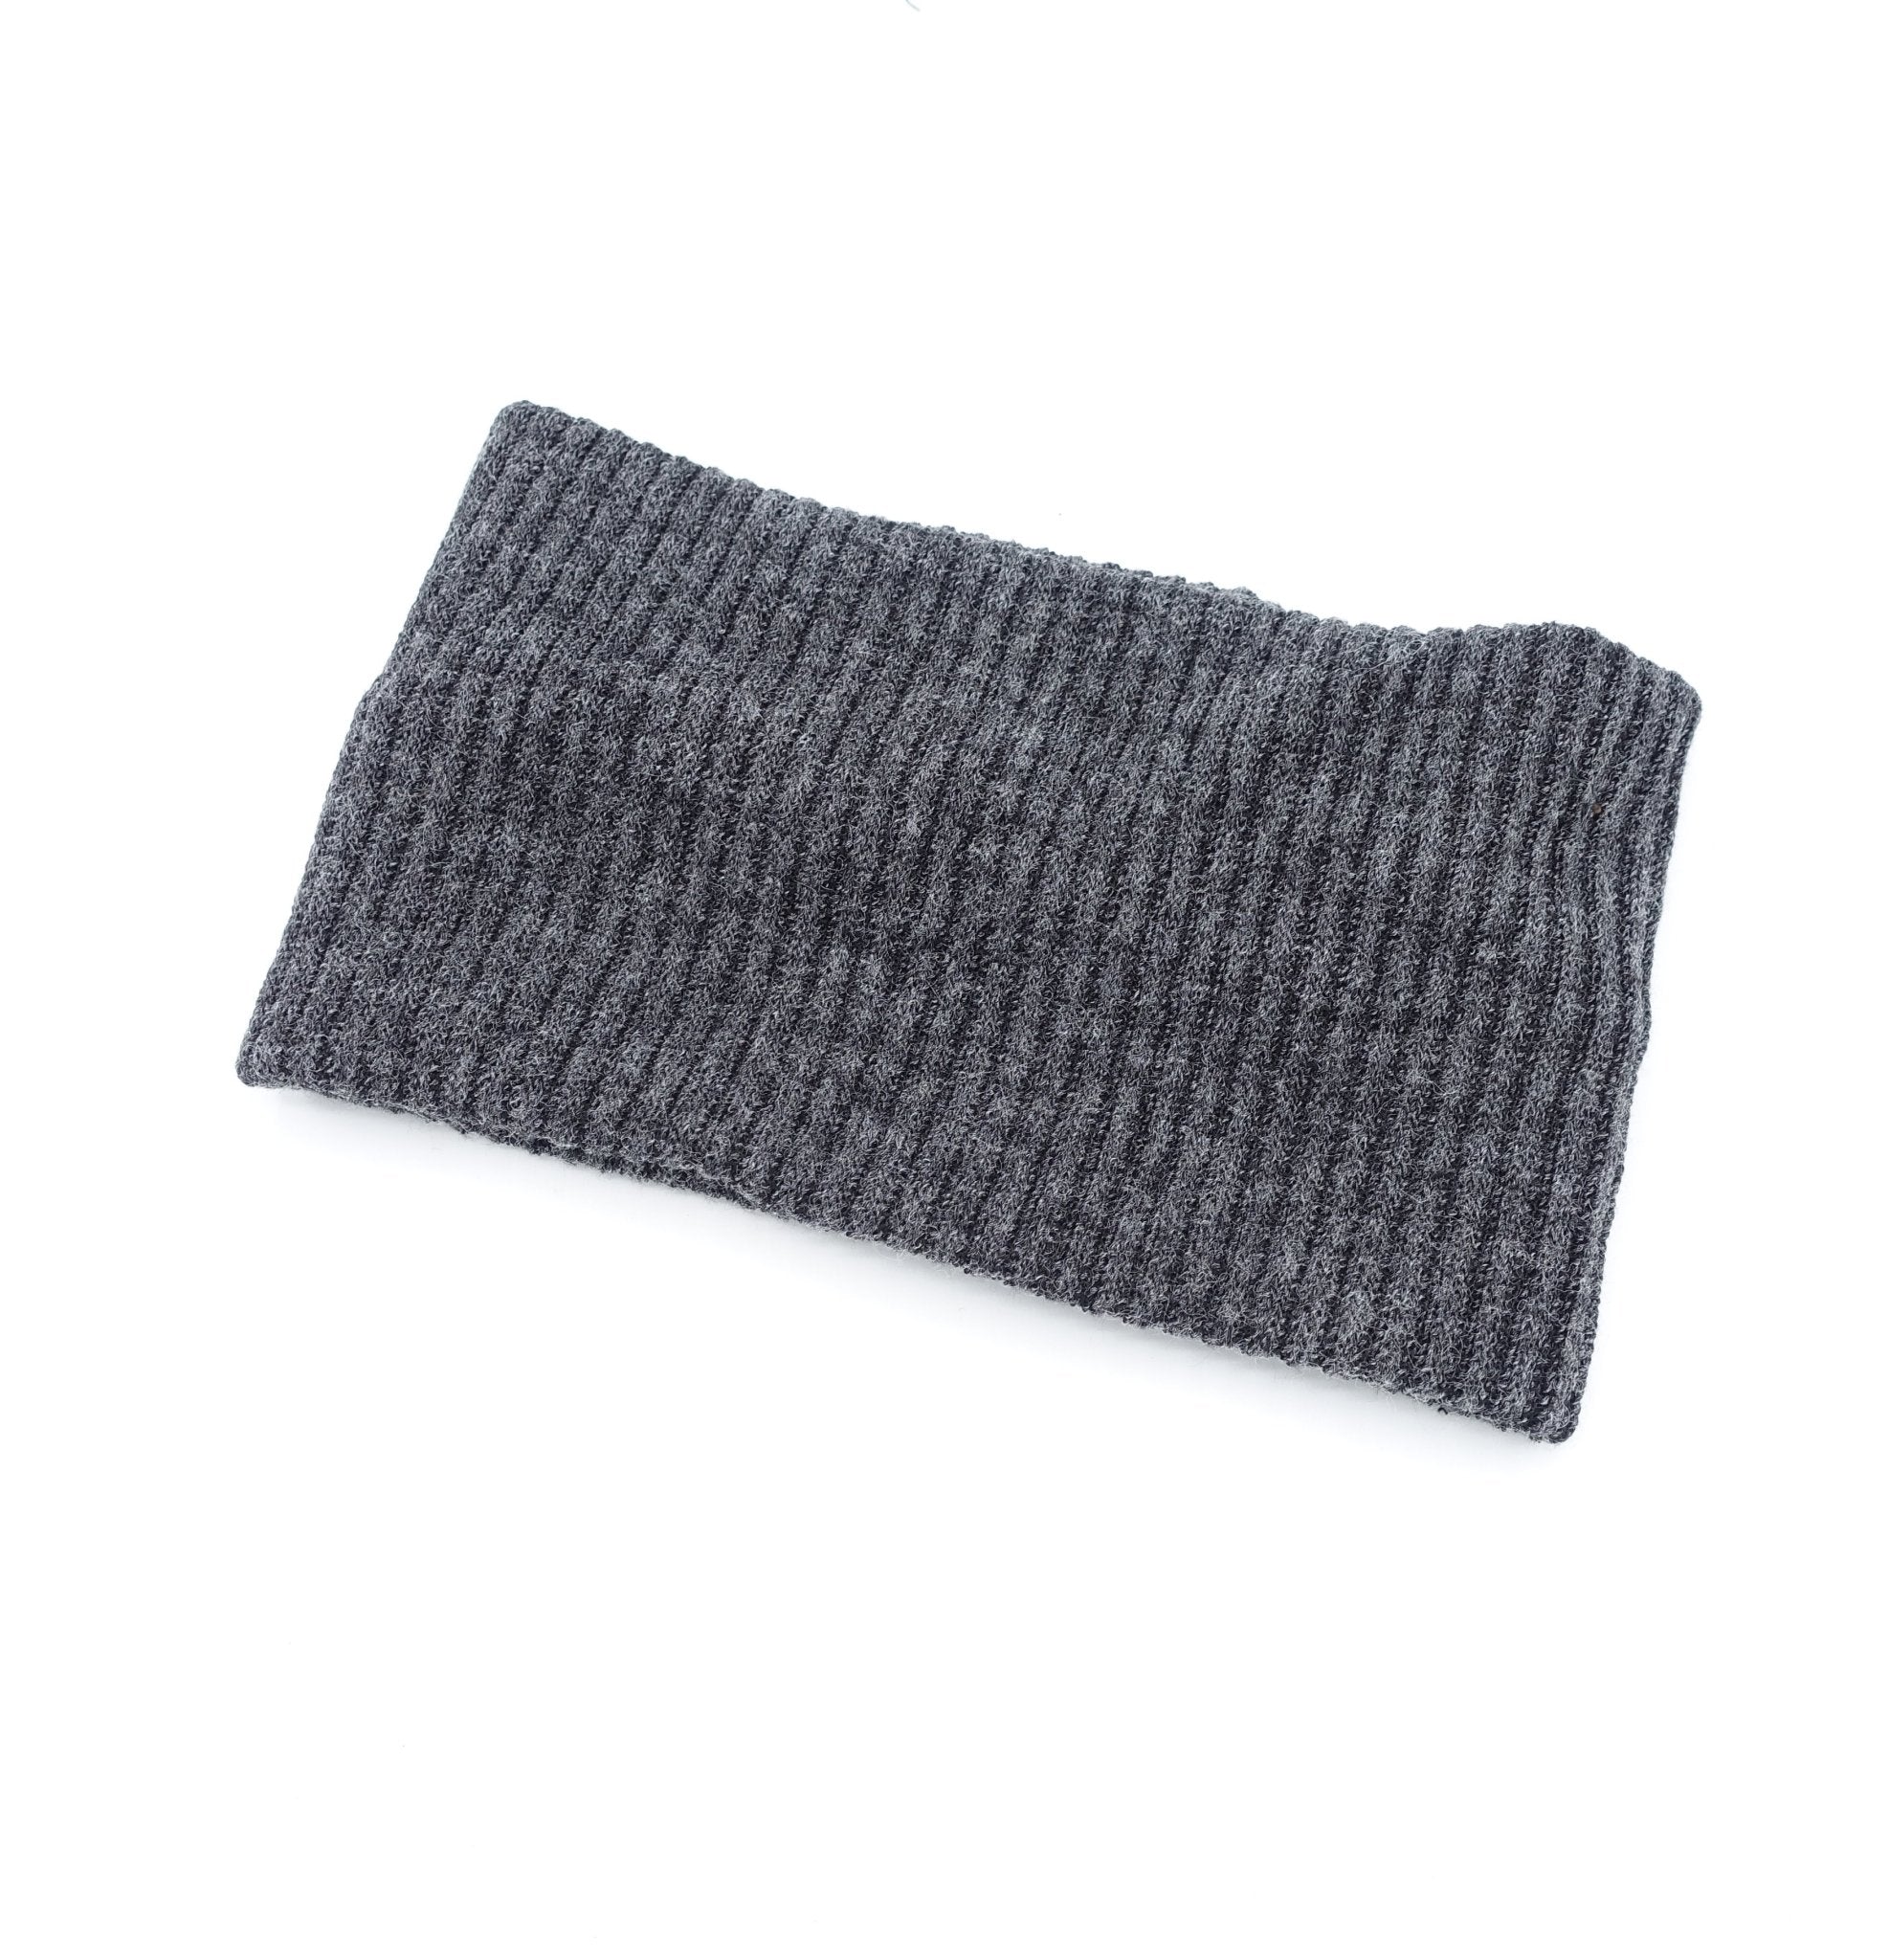 veryshine.com hairband/headband corrugated knit headwrap multi-functional headband Winter neck warmer